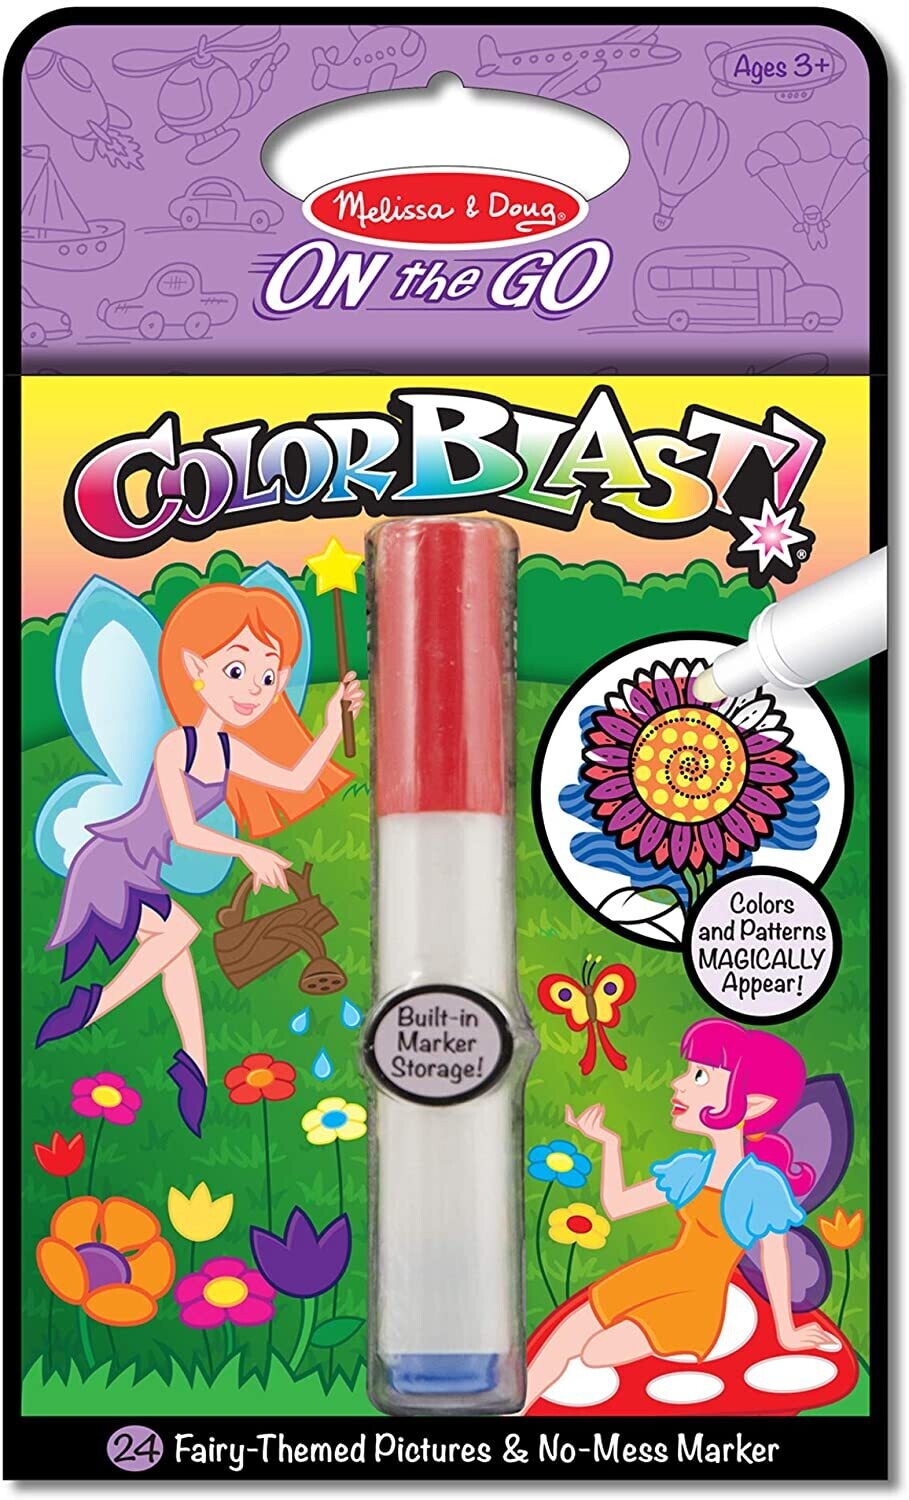 MD 5355 Color Blast Fairy